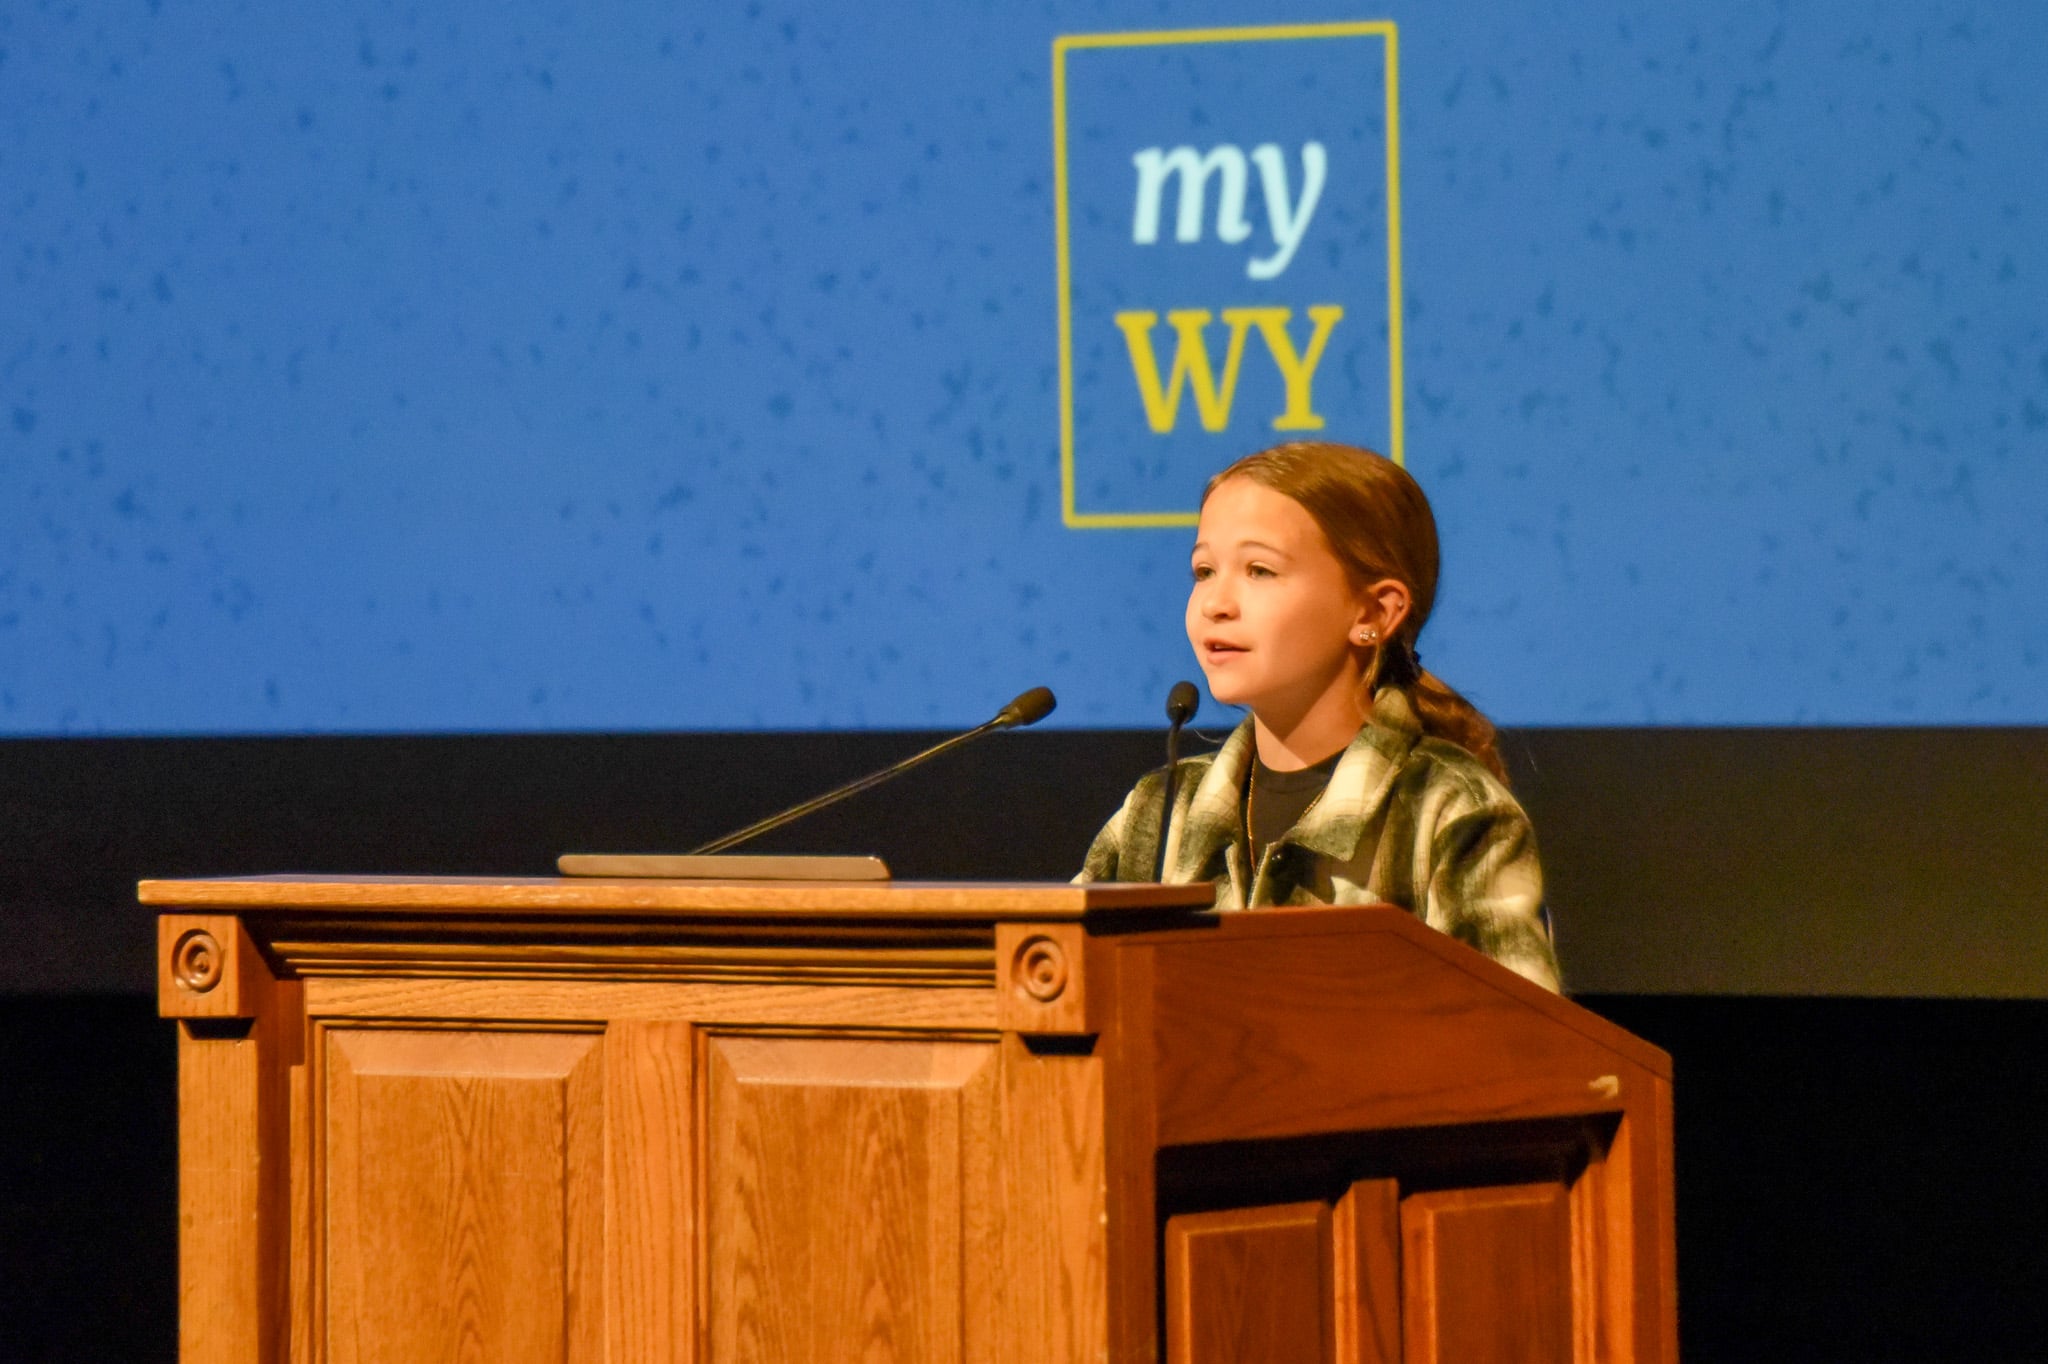 Wyoming student presenting at a podium